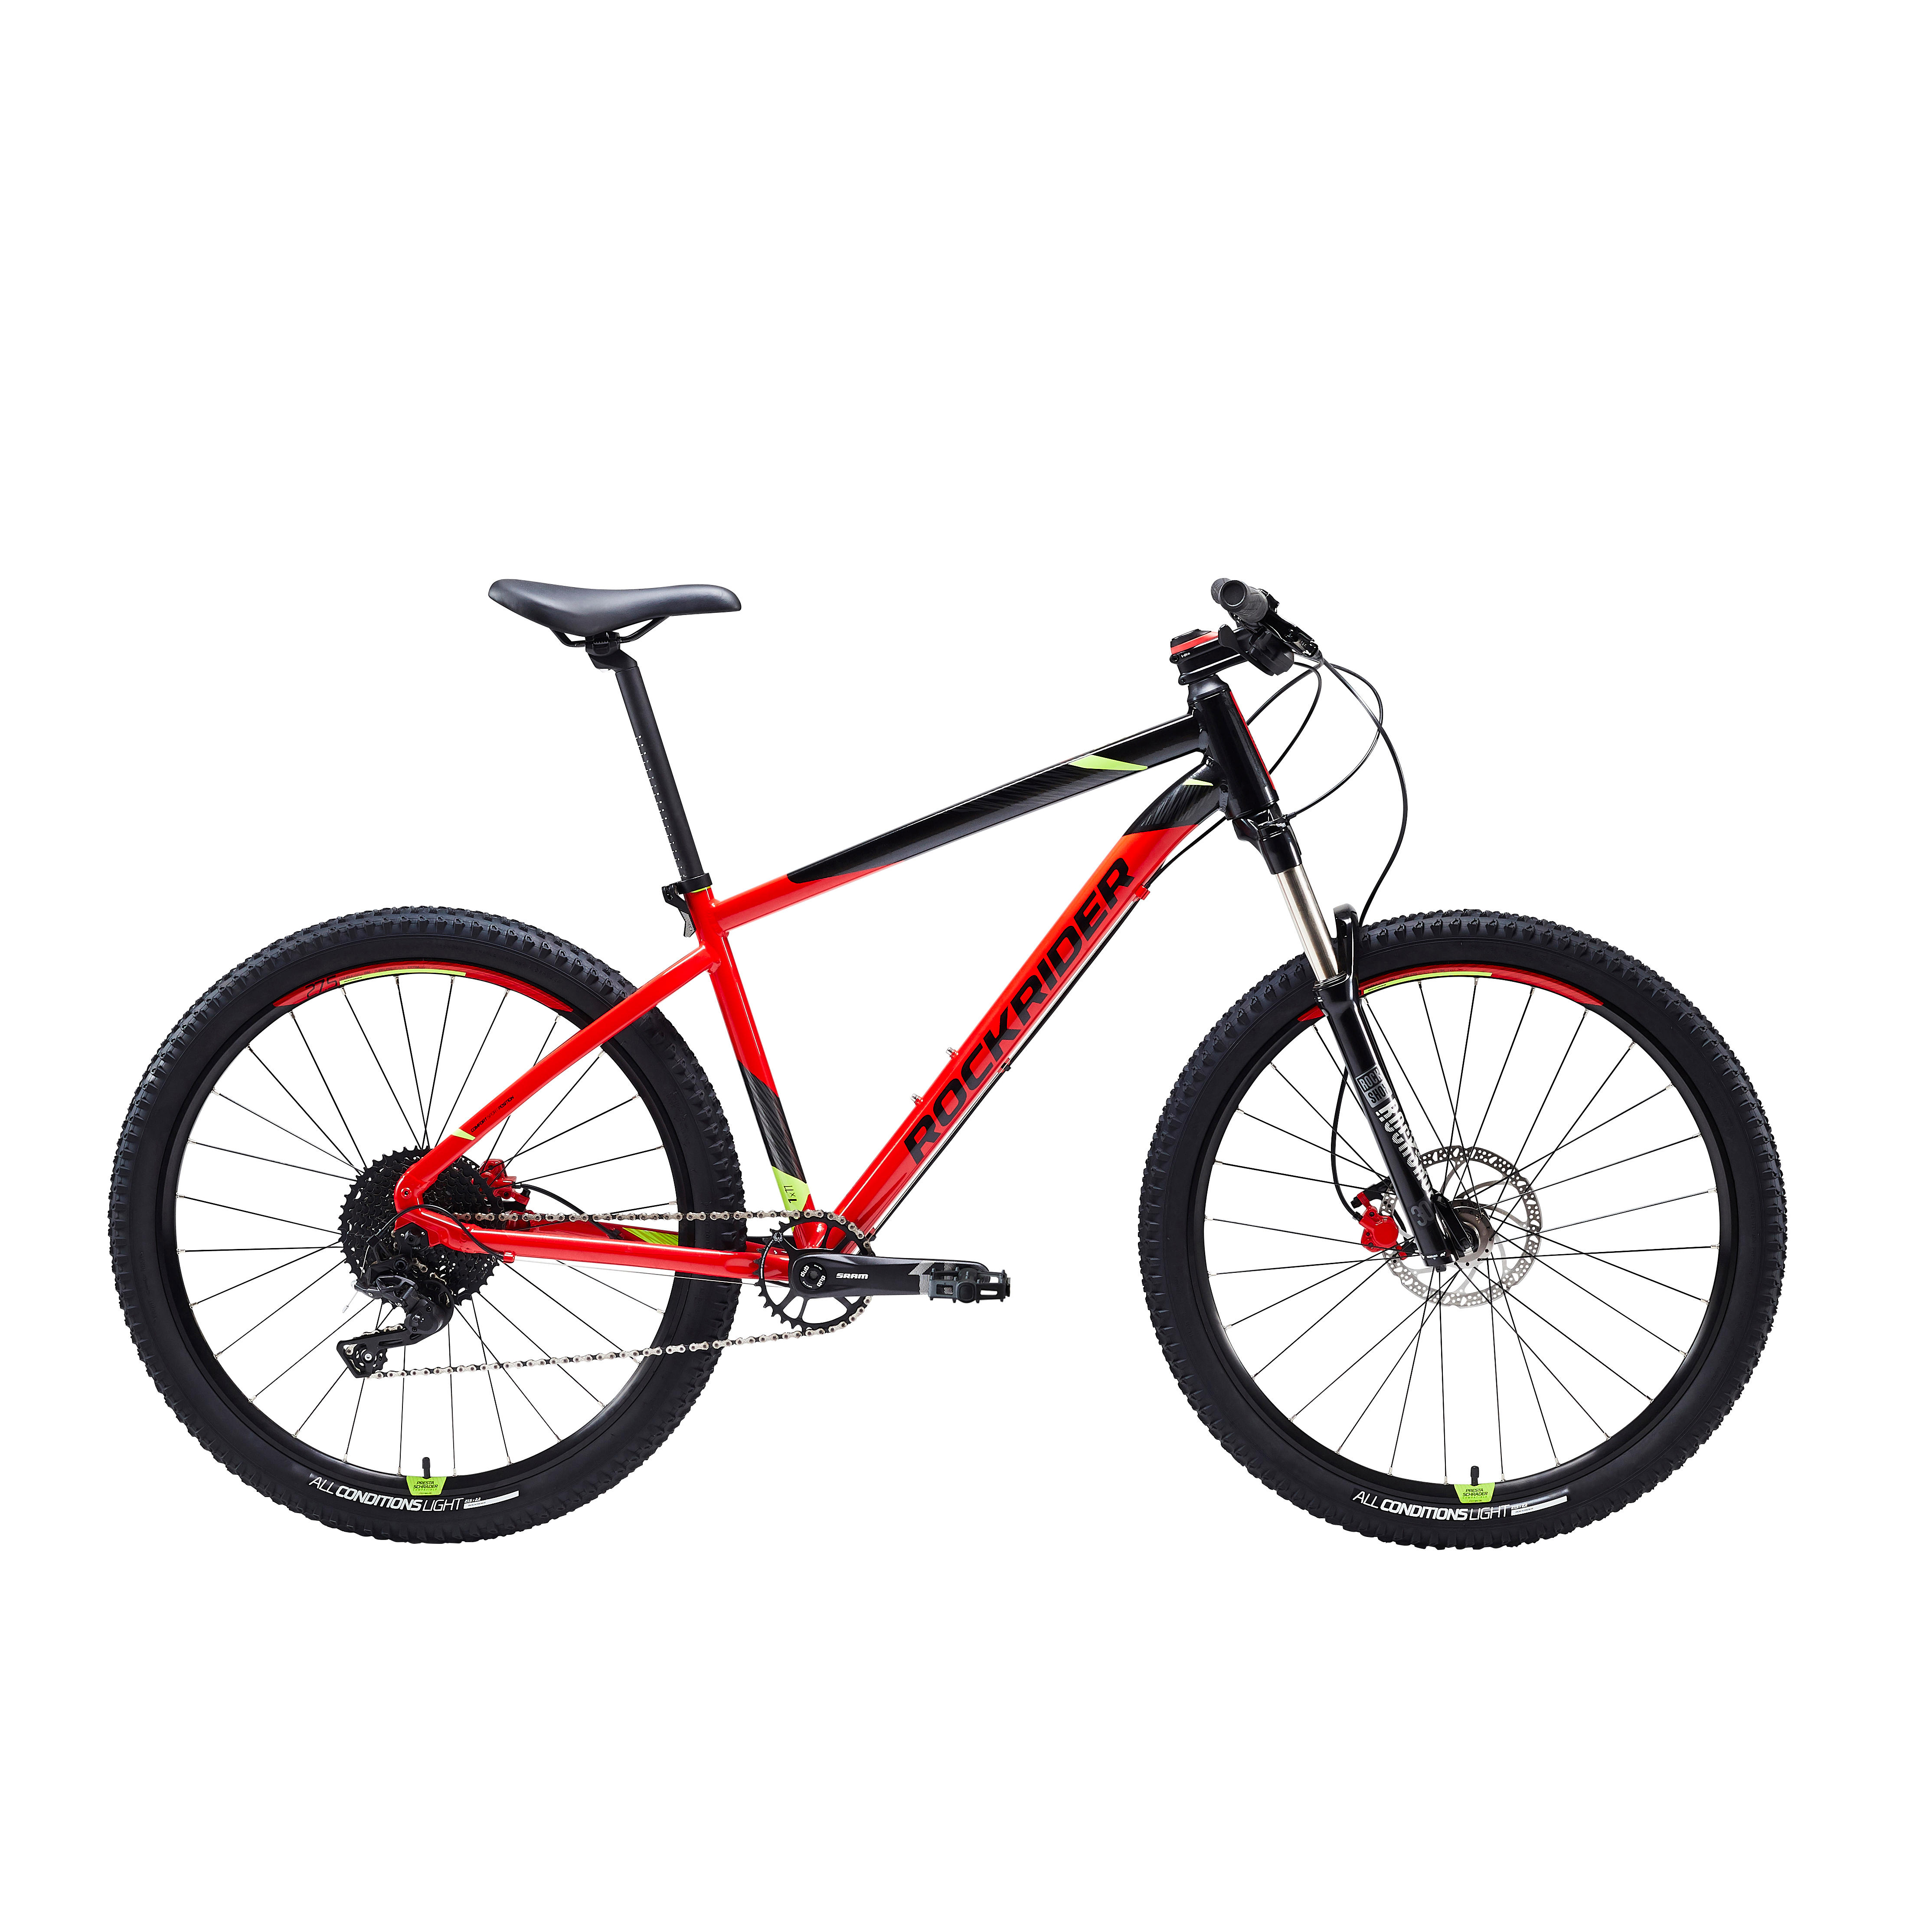 Bicicletă MTB ST 900 27,5″ Negru-Roșu La Oferta Online decathlon imagine La Oferta Online